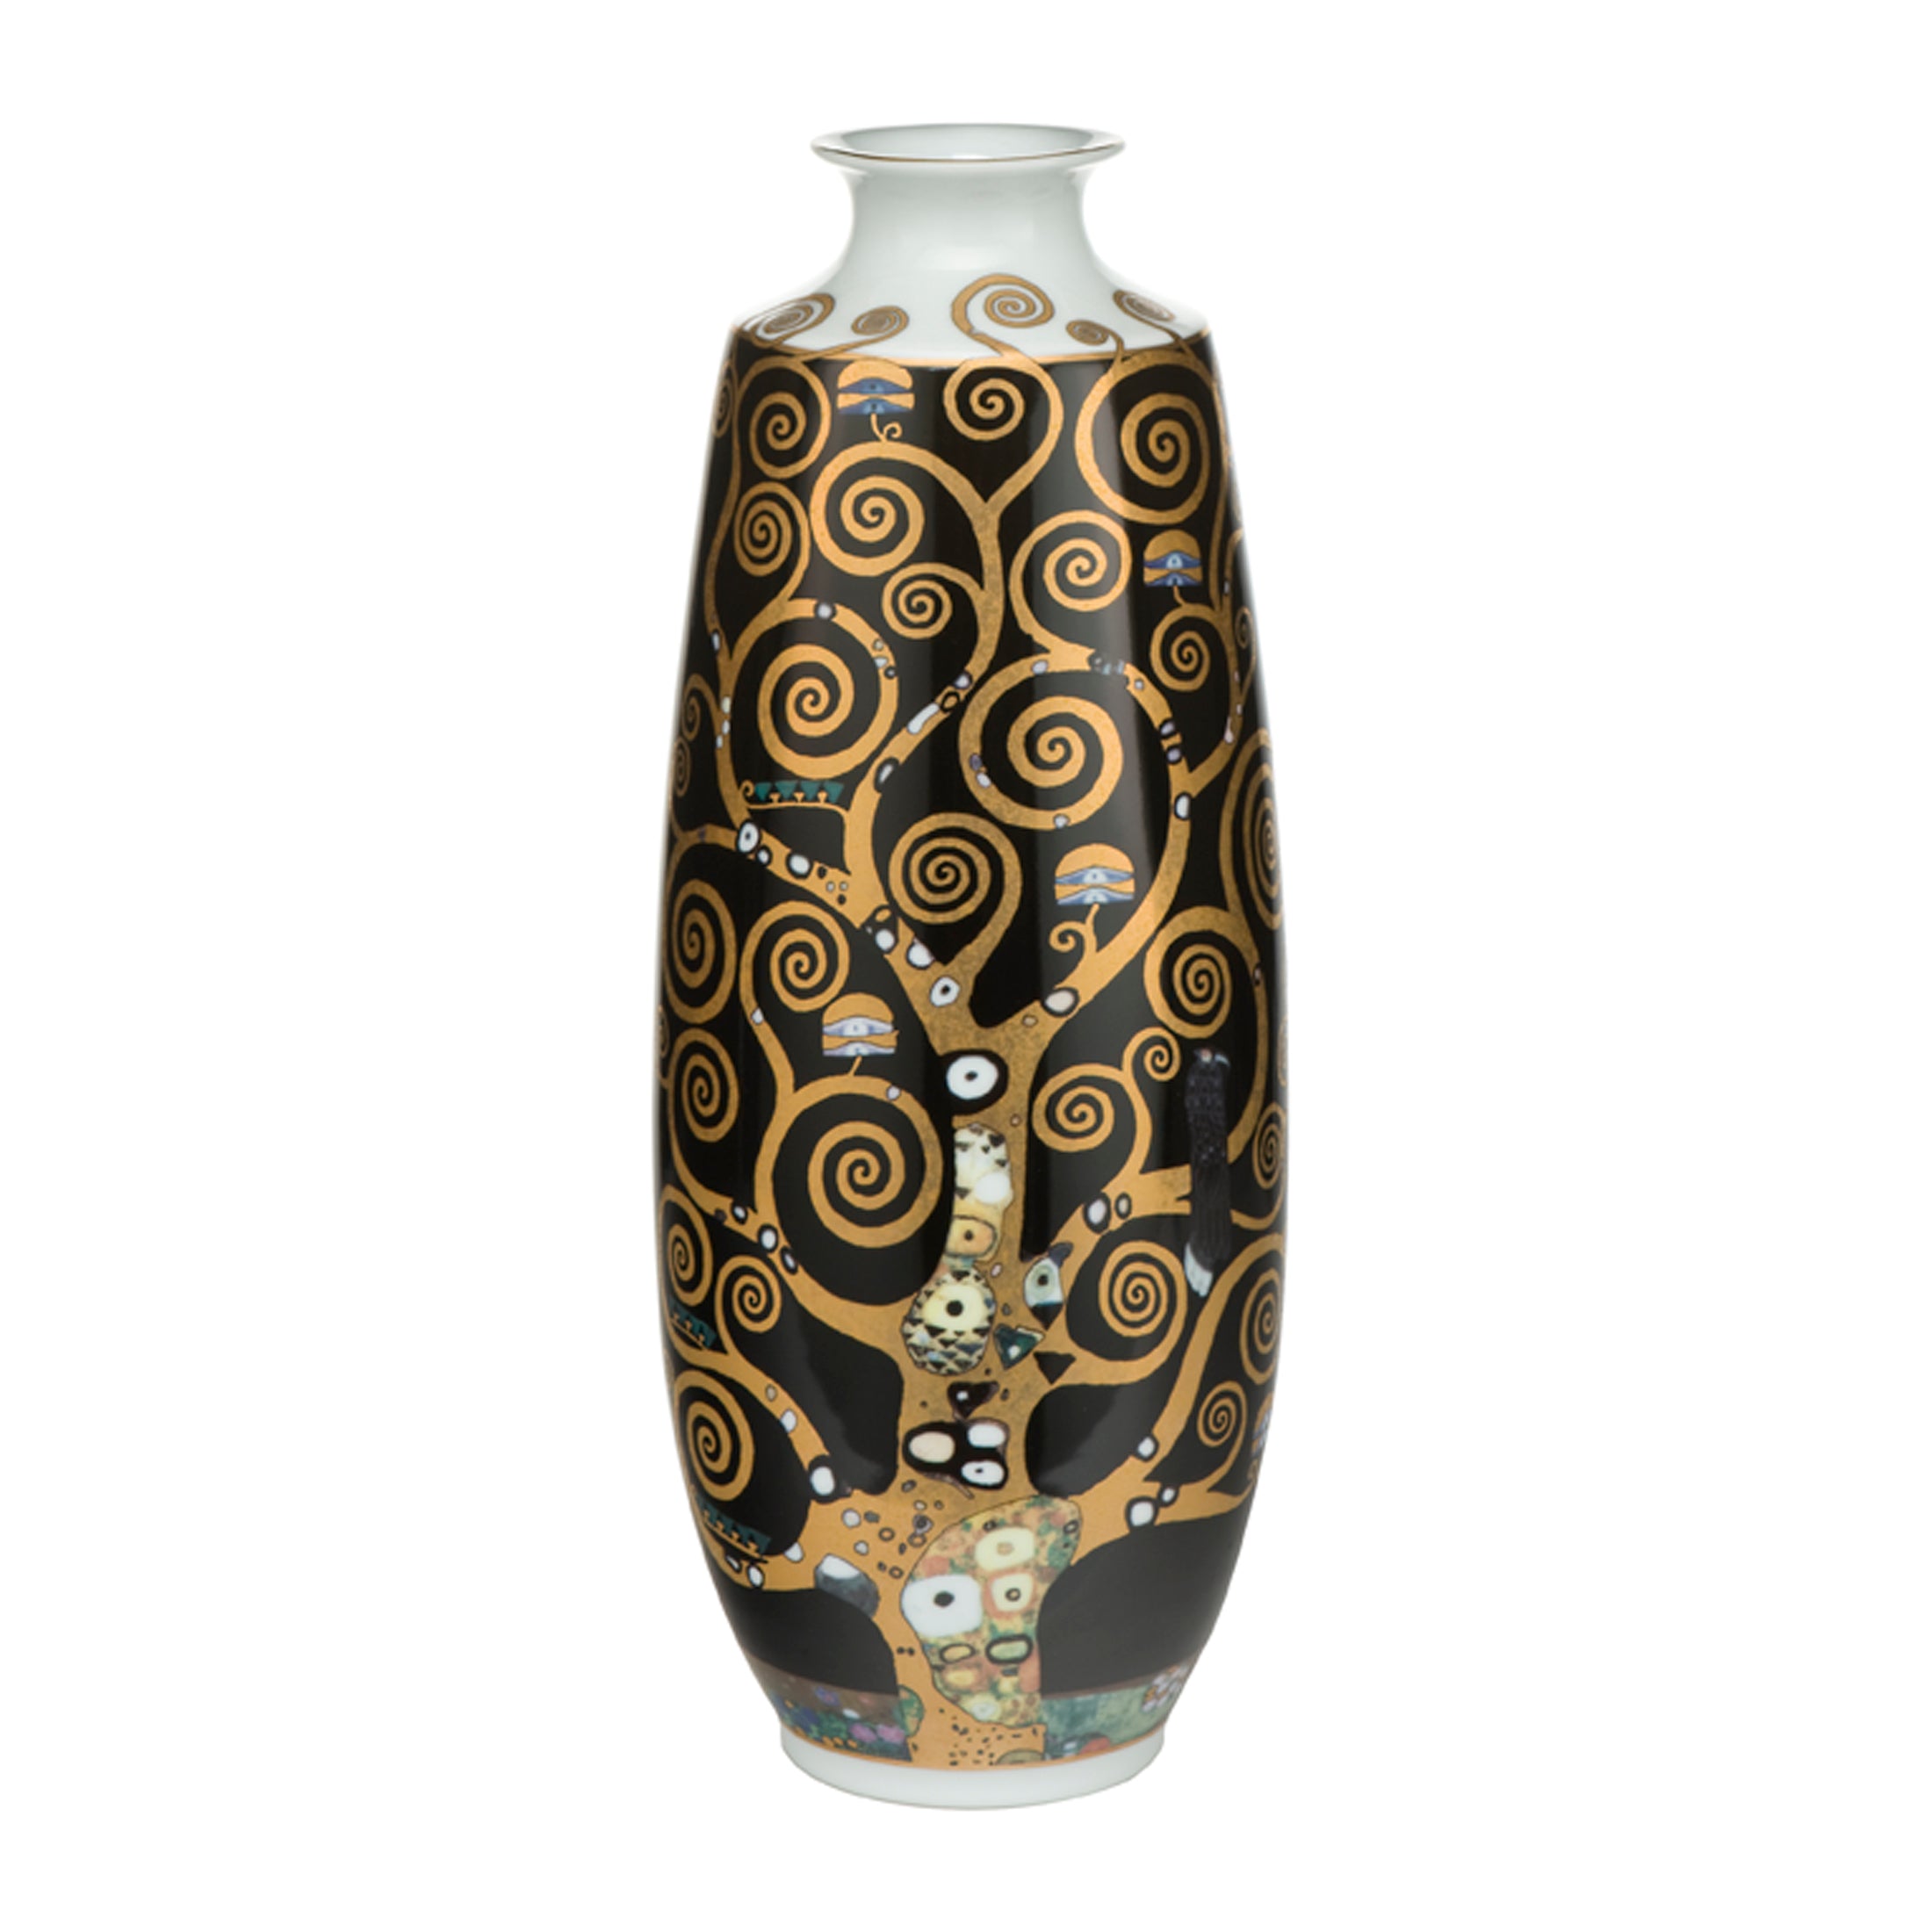 Gustav-Klimt-Der-Lebensbaum-Vase-42cm-by-Goebel-berlindeluxe-vase-goldener-baum